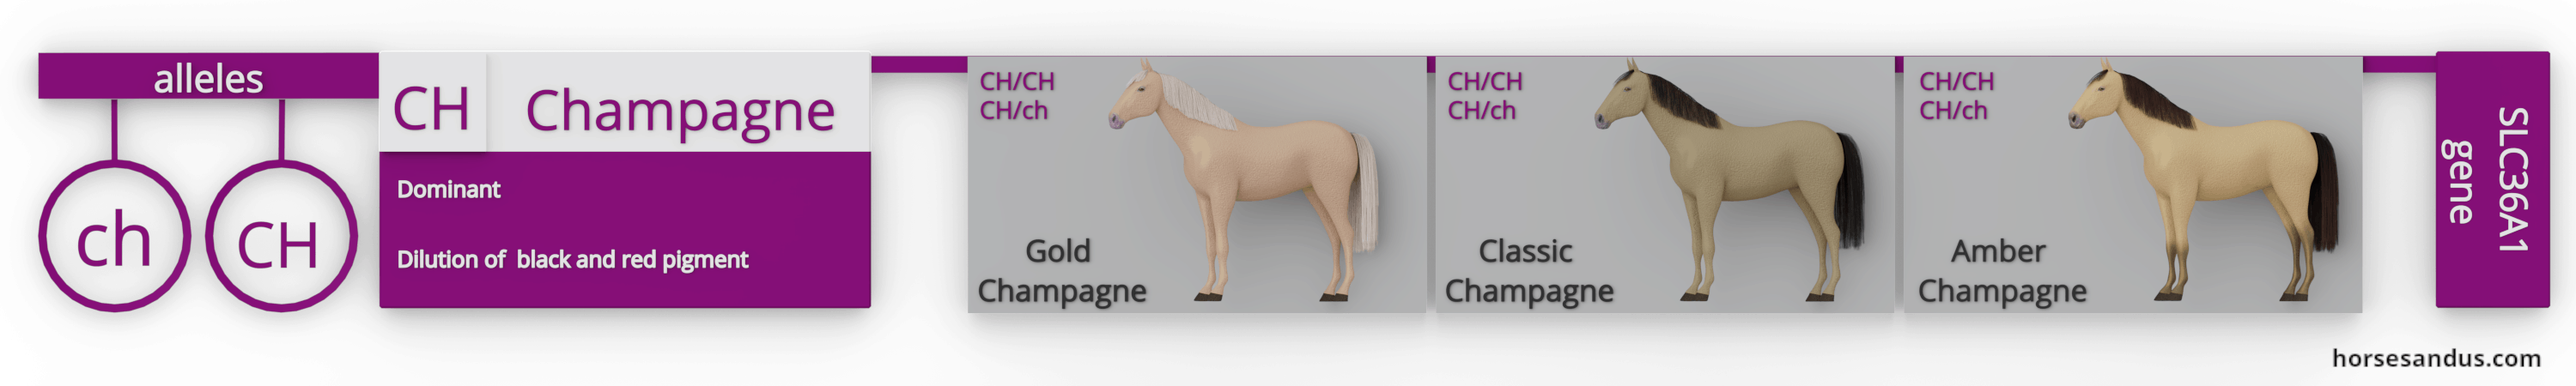 equine champagne gene